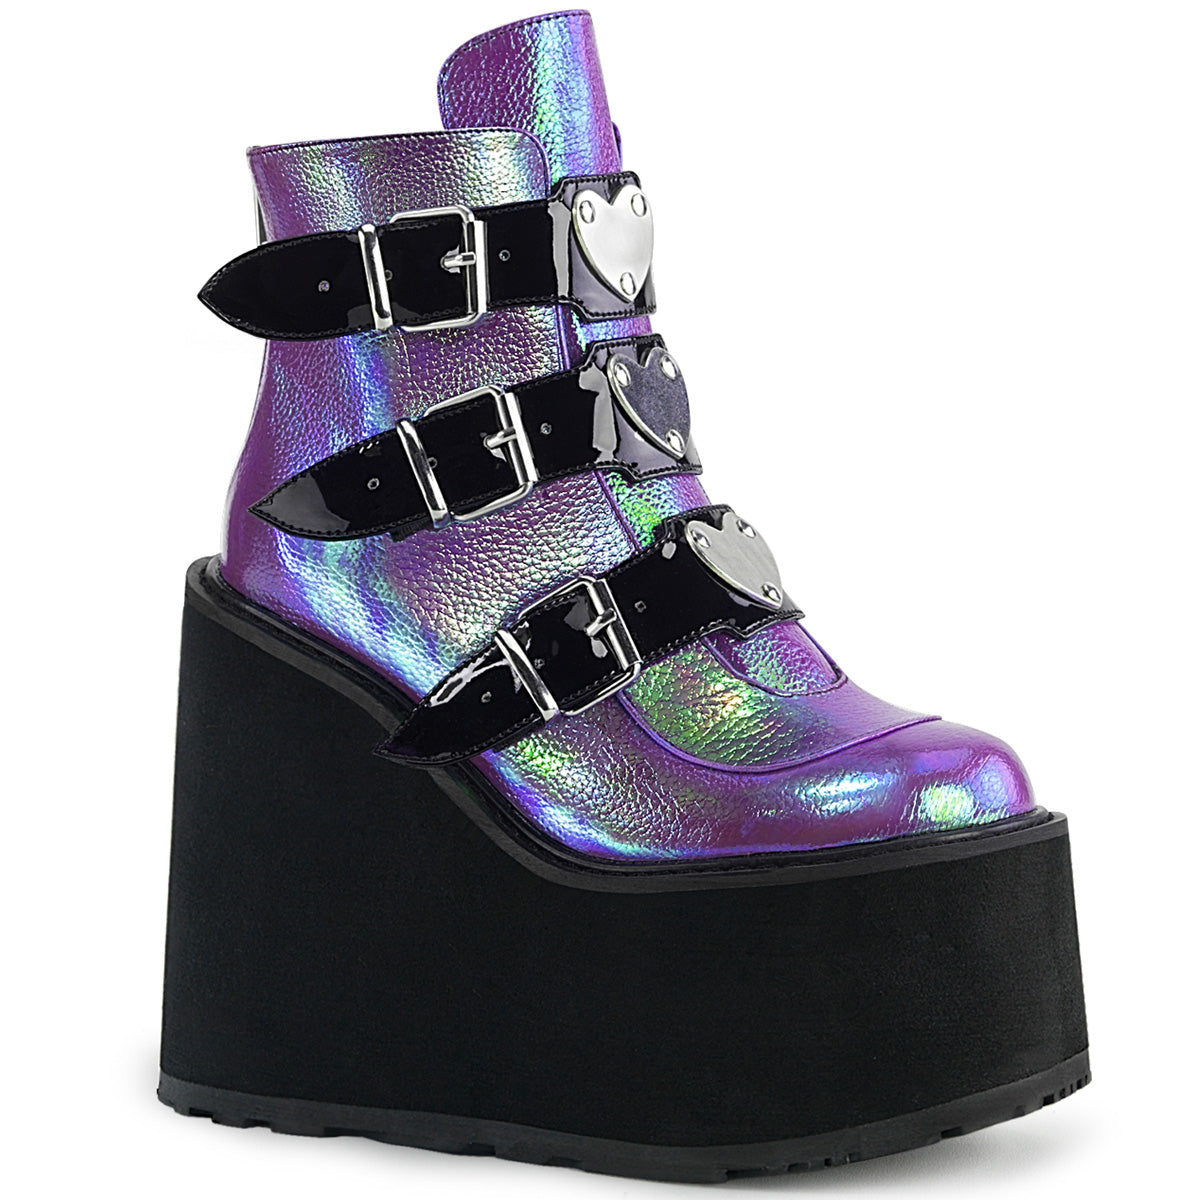 SWING-105 Alternative Footwear Demonia Women's Ankle Boots Purple Iridescent Vegan Leather